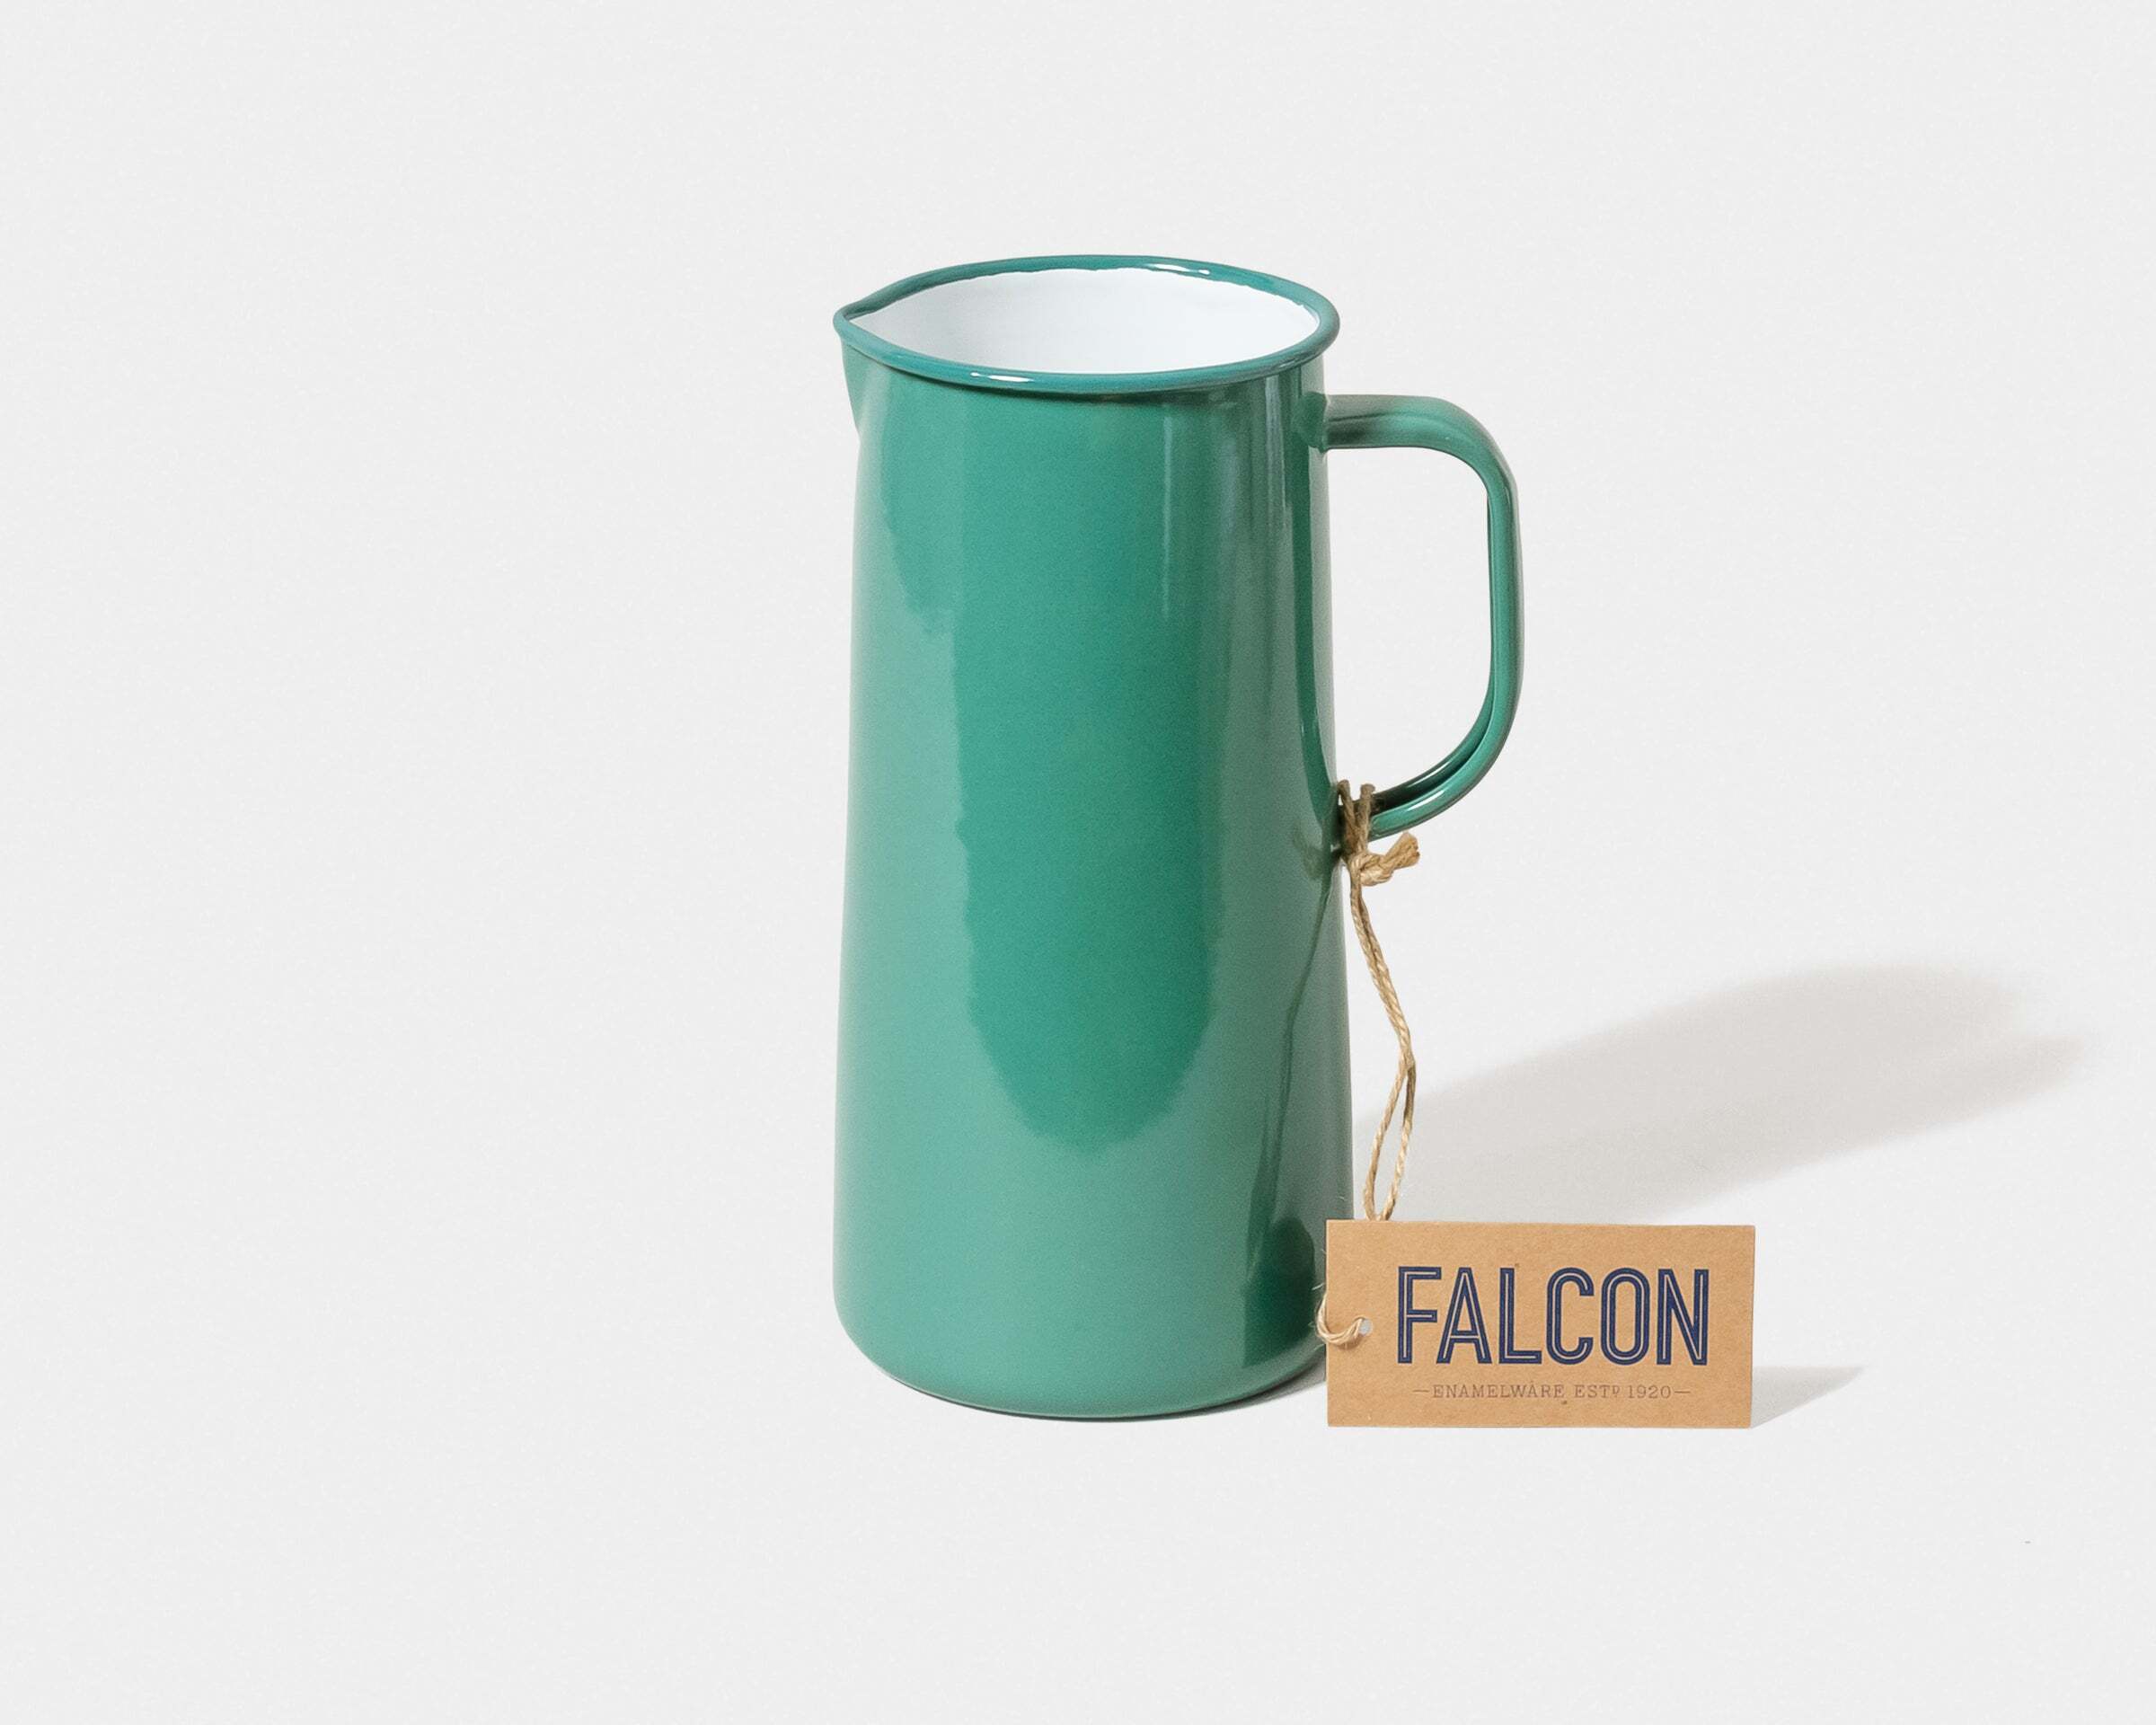 Falcon Enamelware Spring Green 3 Pint Jug